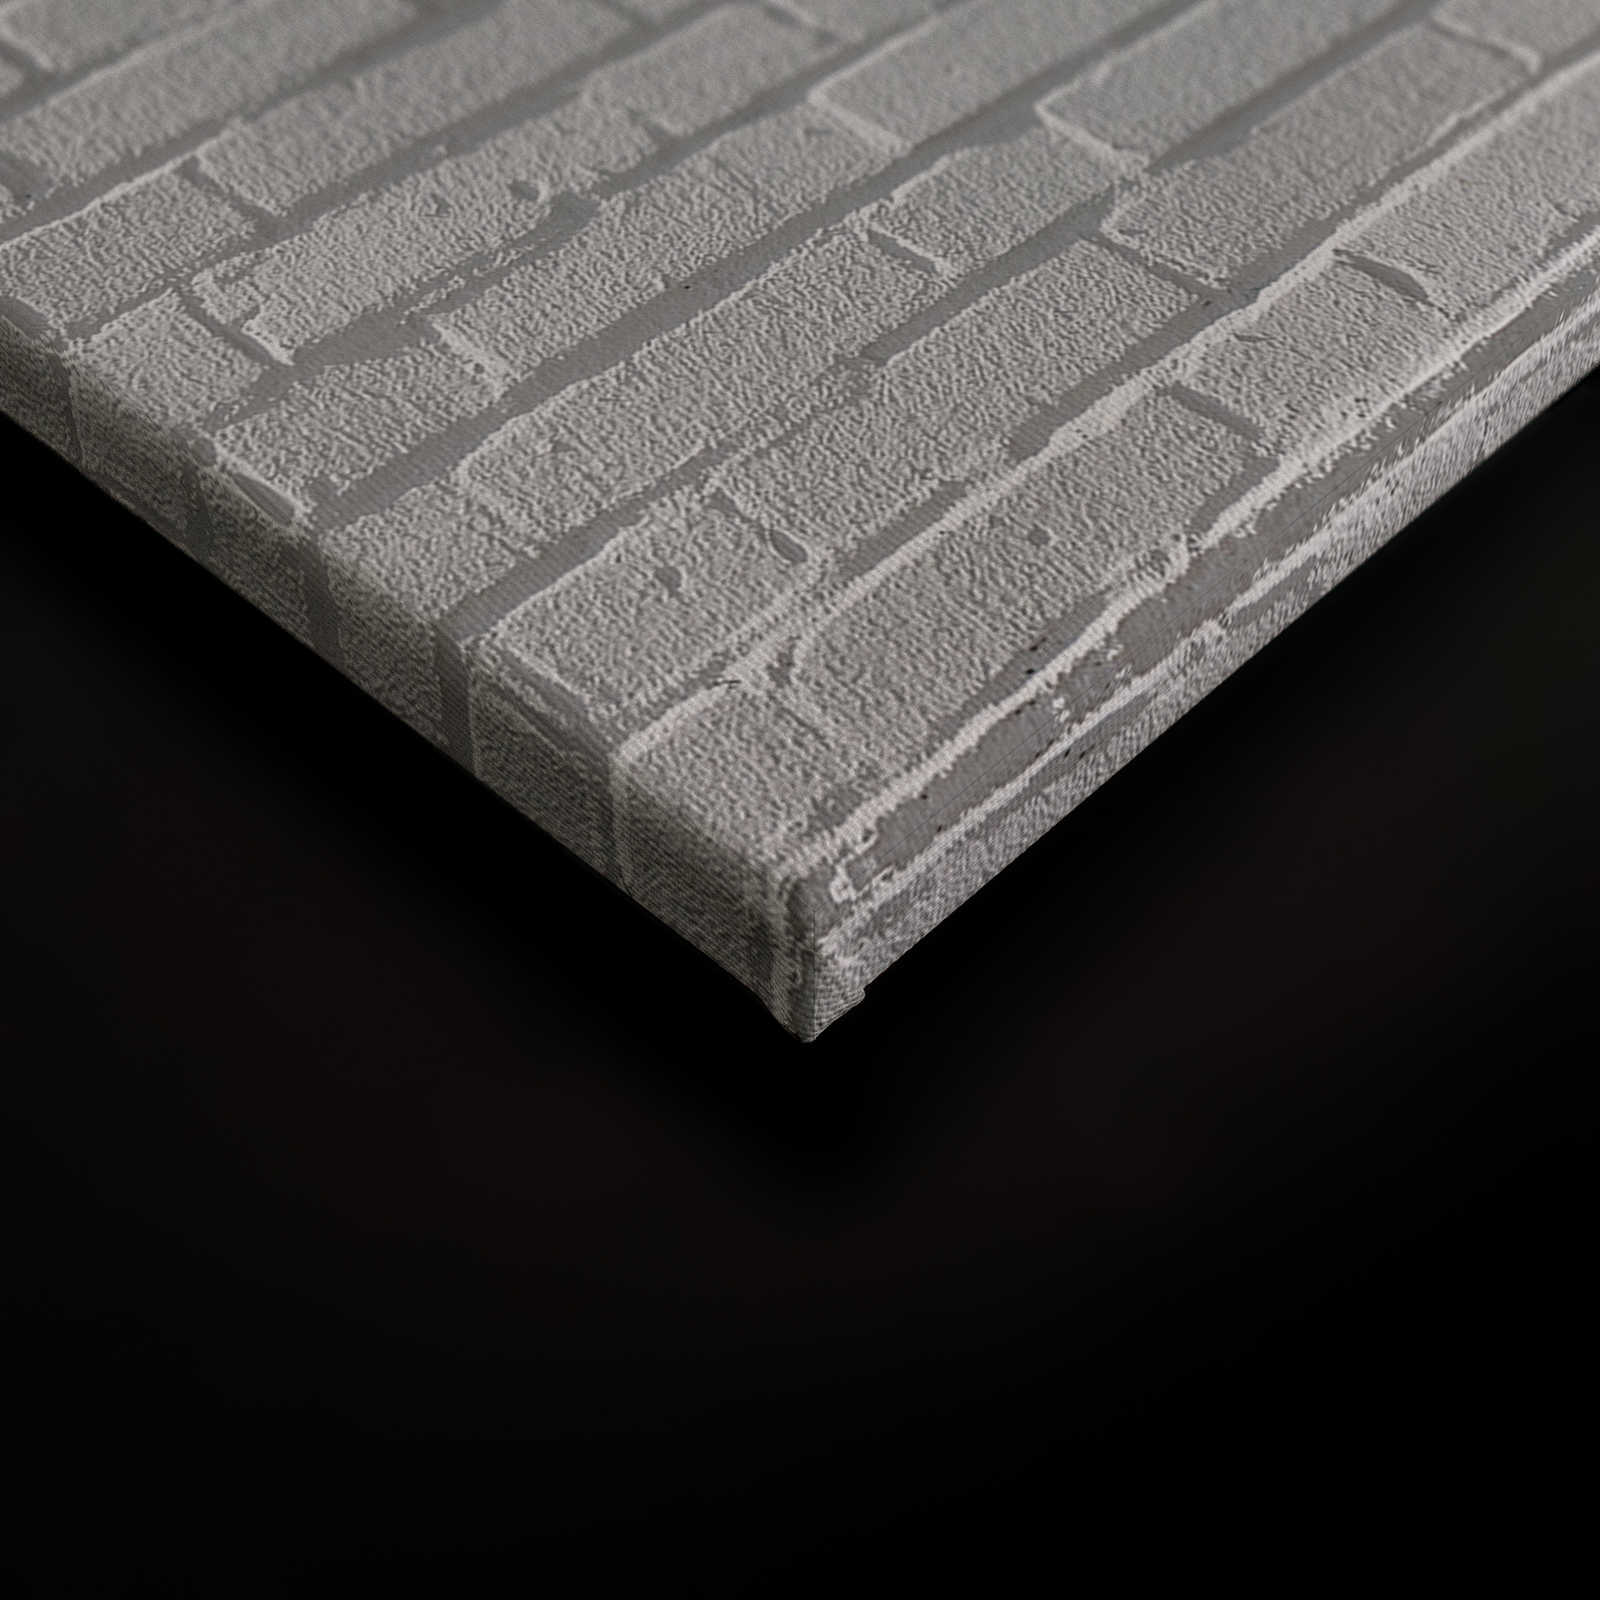             Leinwandbild graue Ziegelmauer in 3D Look – 1,20 m x 0,80 m
        